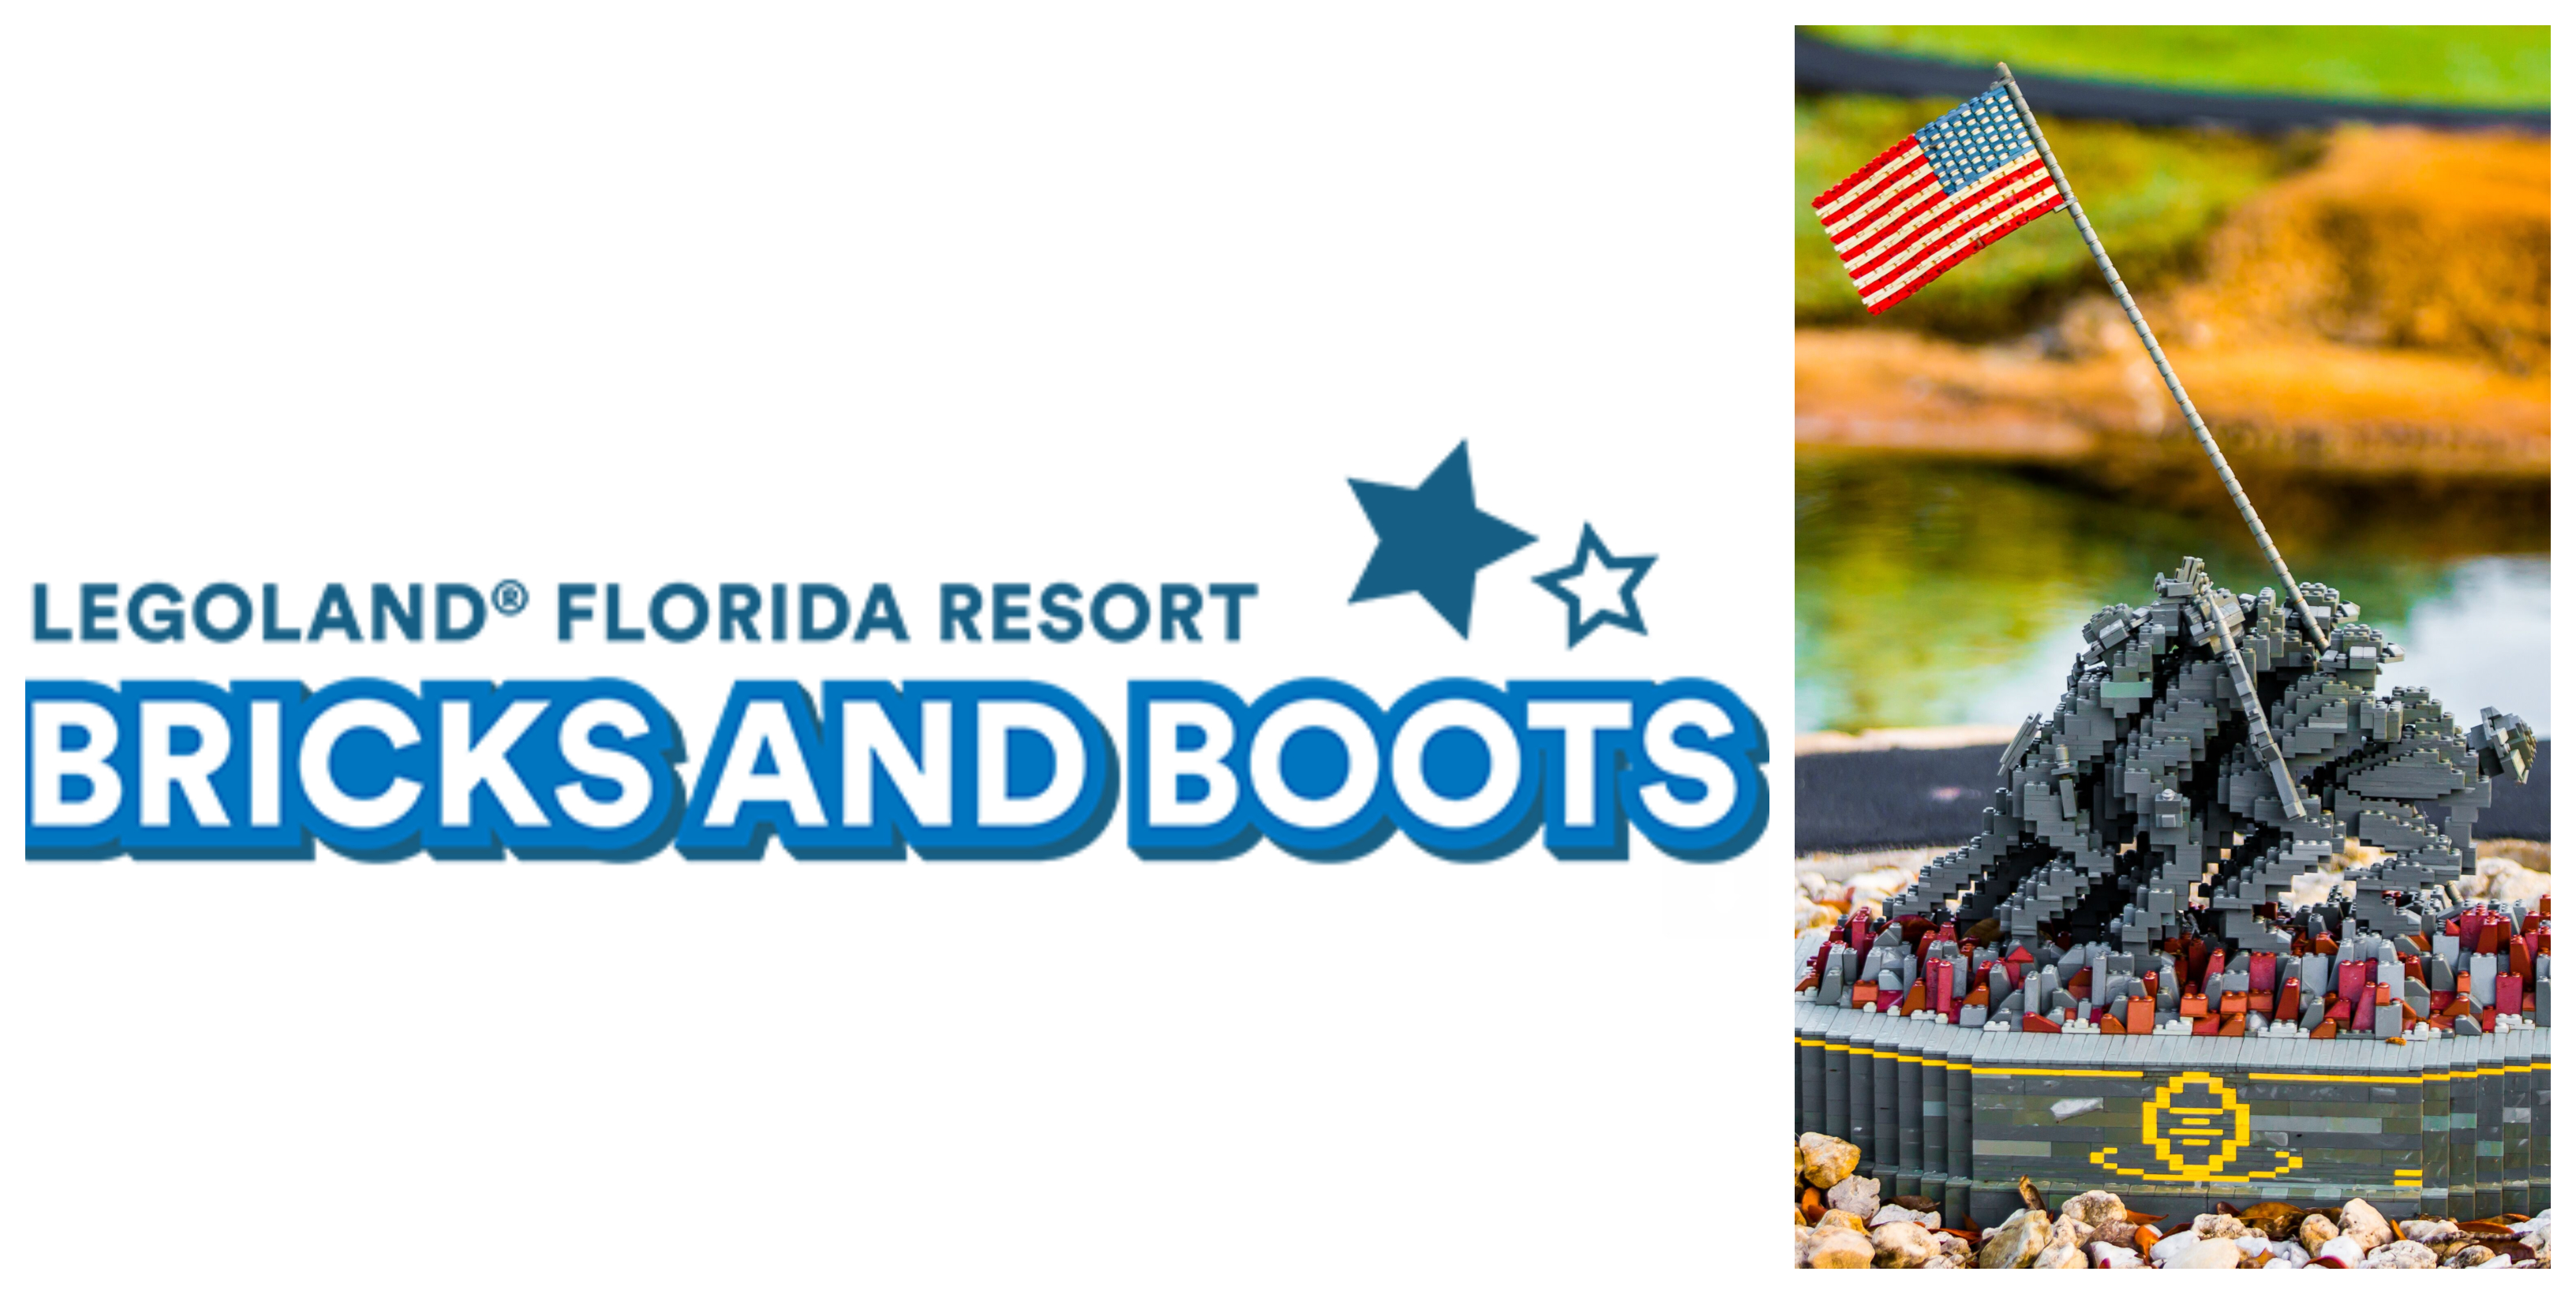 LEGOLAND Florida Resort Honors U.S. Veterans with Free Theme Park Admission This November